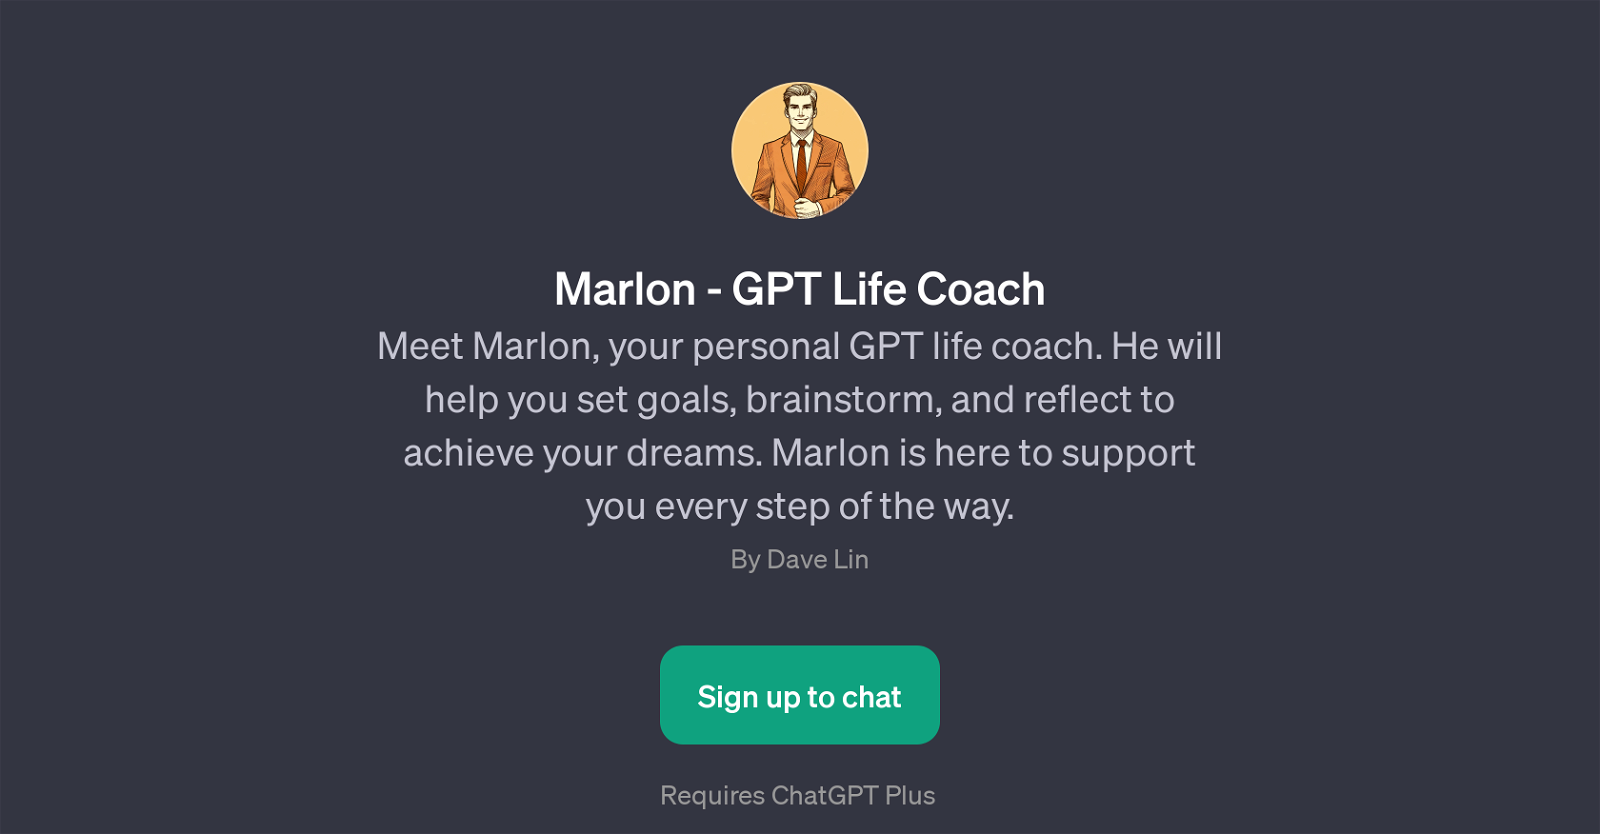 Marlon - GPT Life Coach website